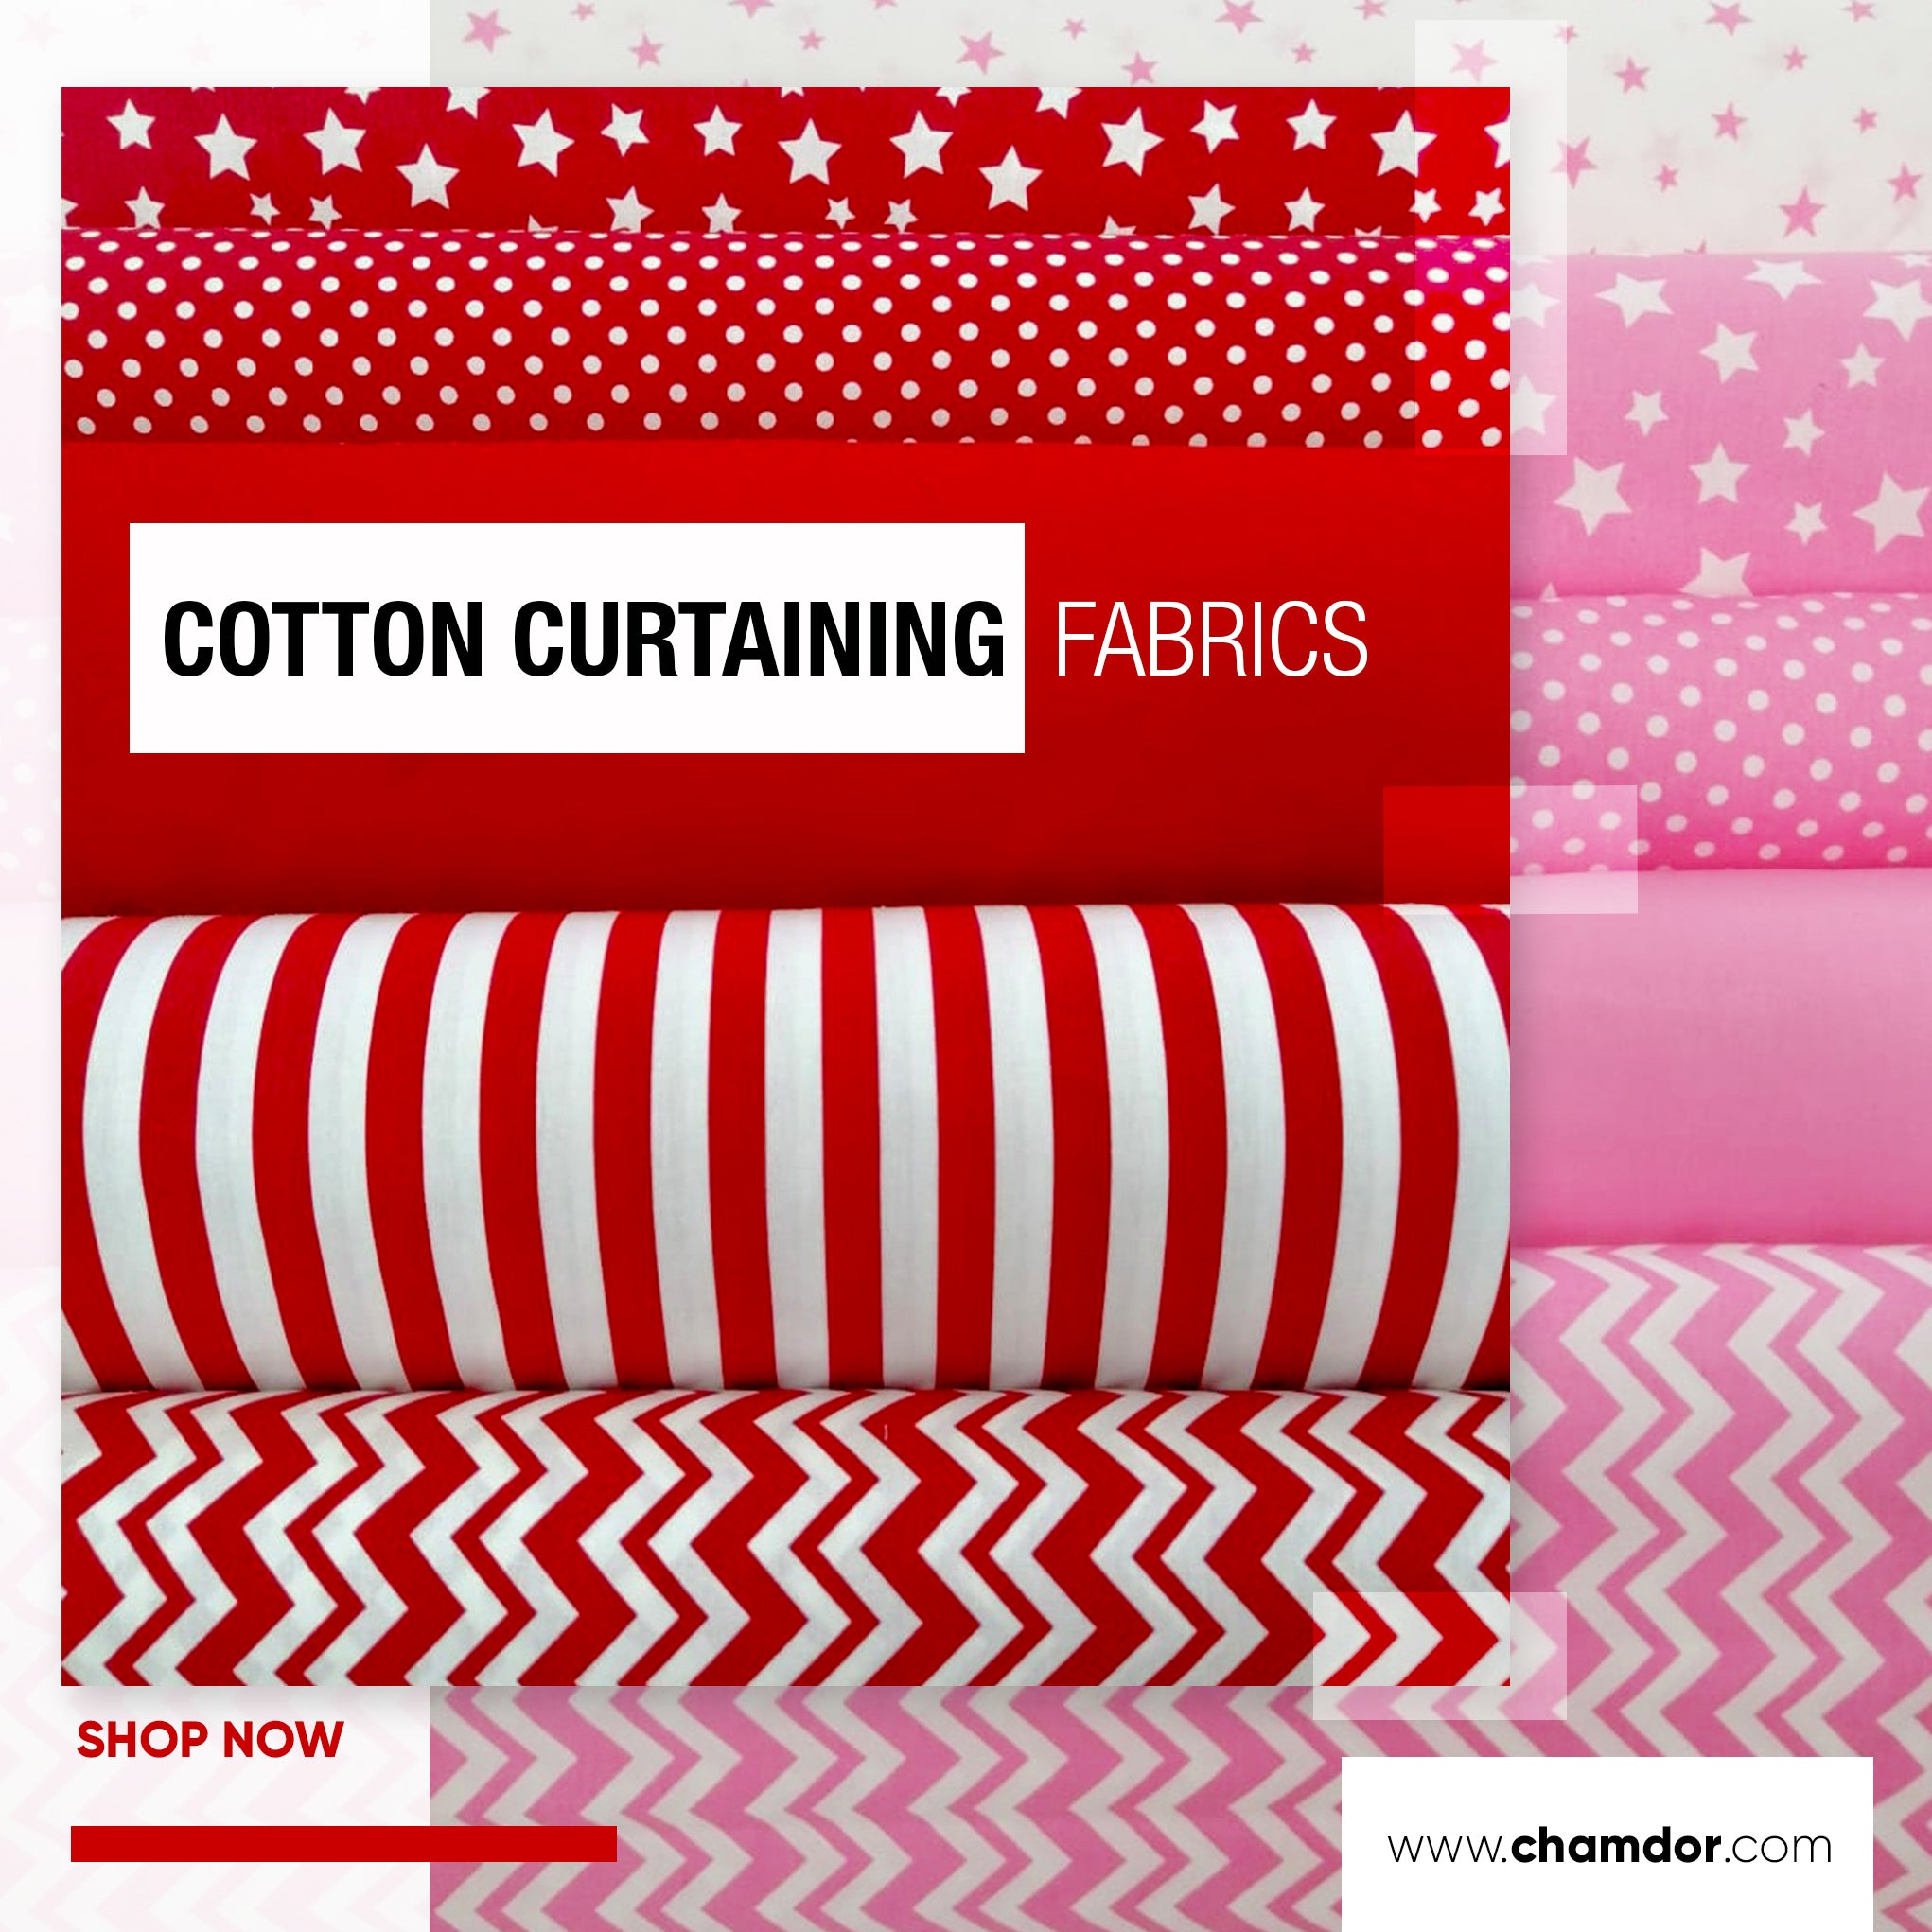 Cotton Curtaining Fabrics